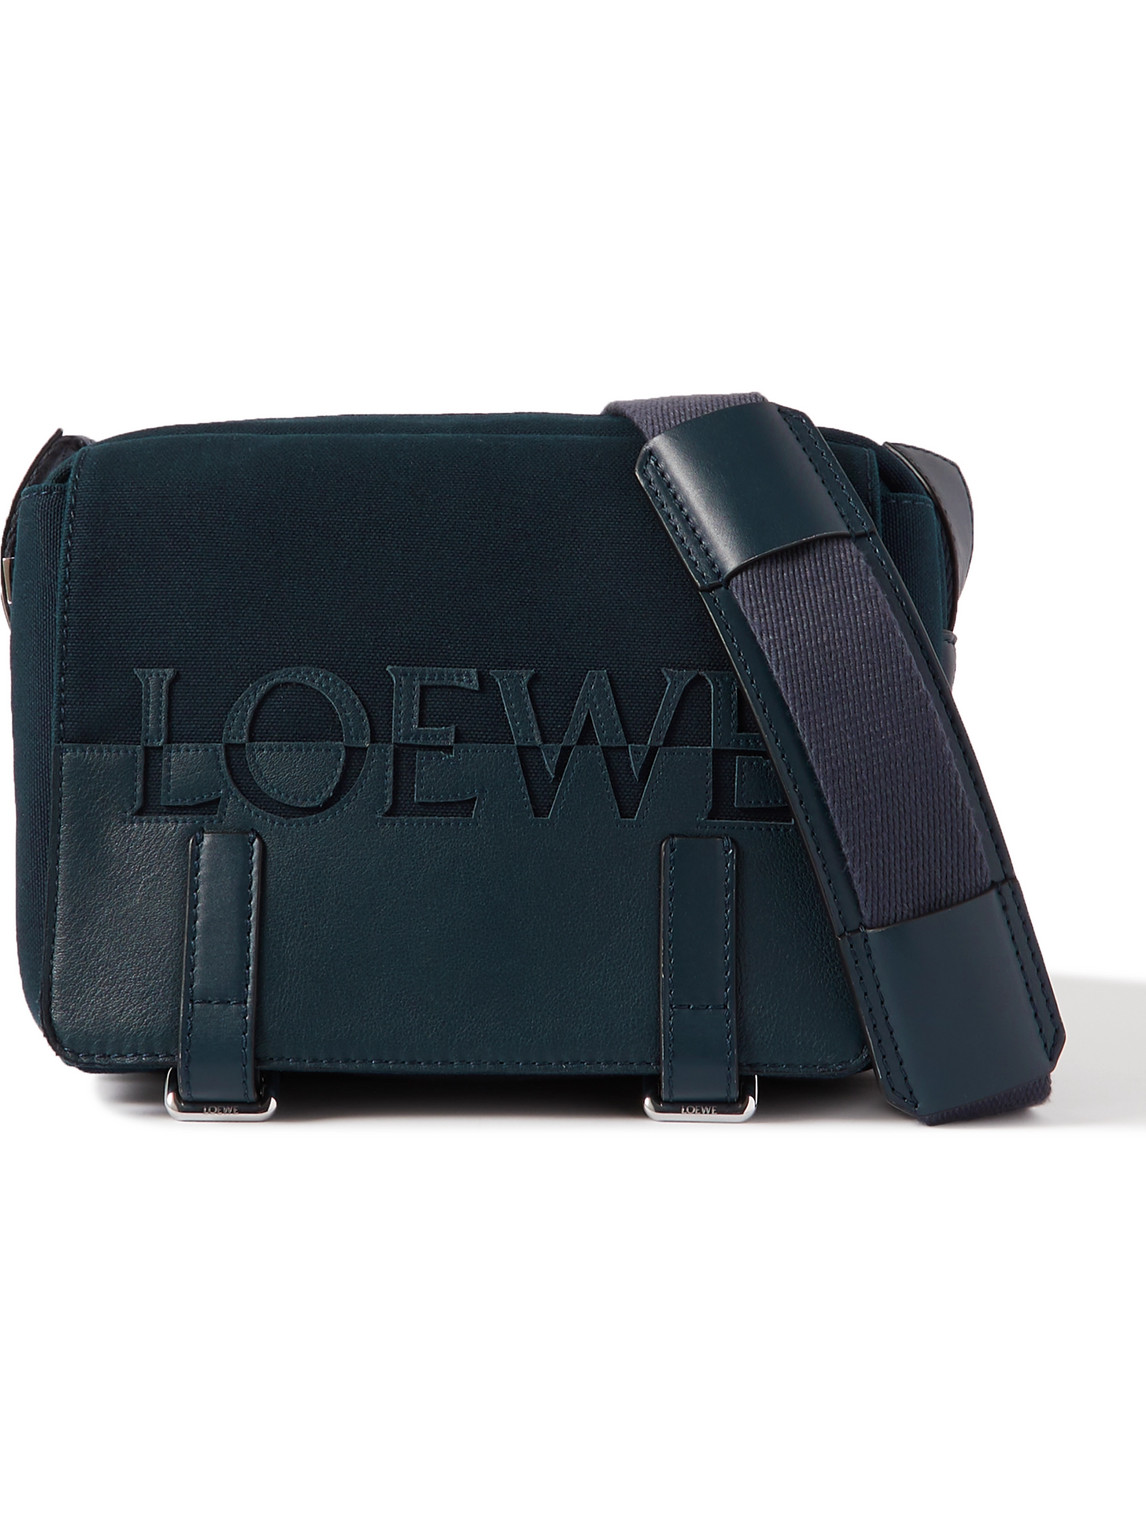 LOEWE Elephant Leather Messenger Bag for Men